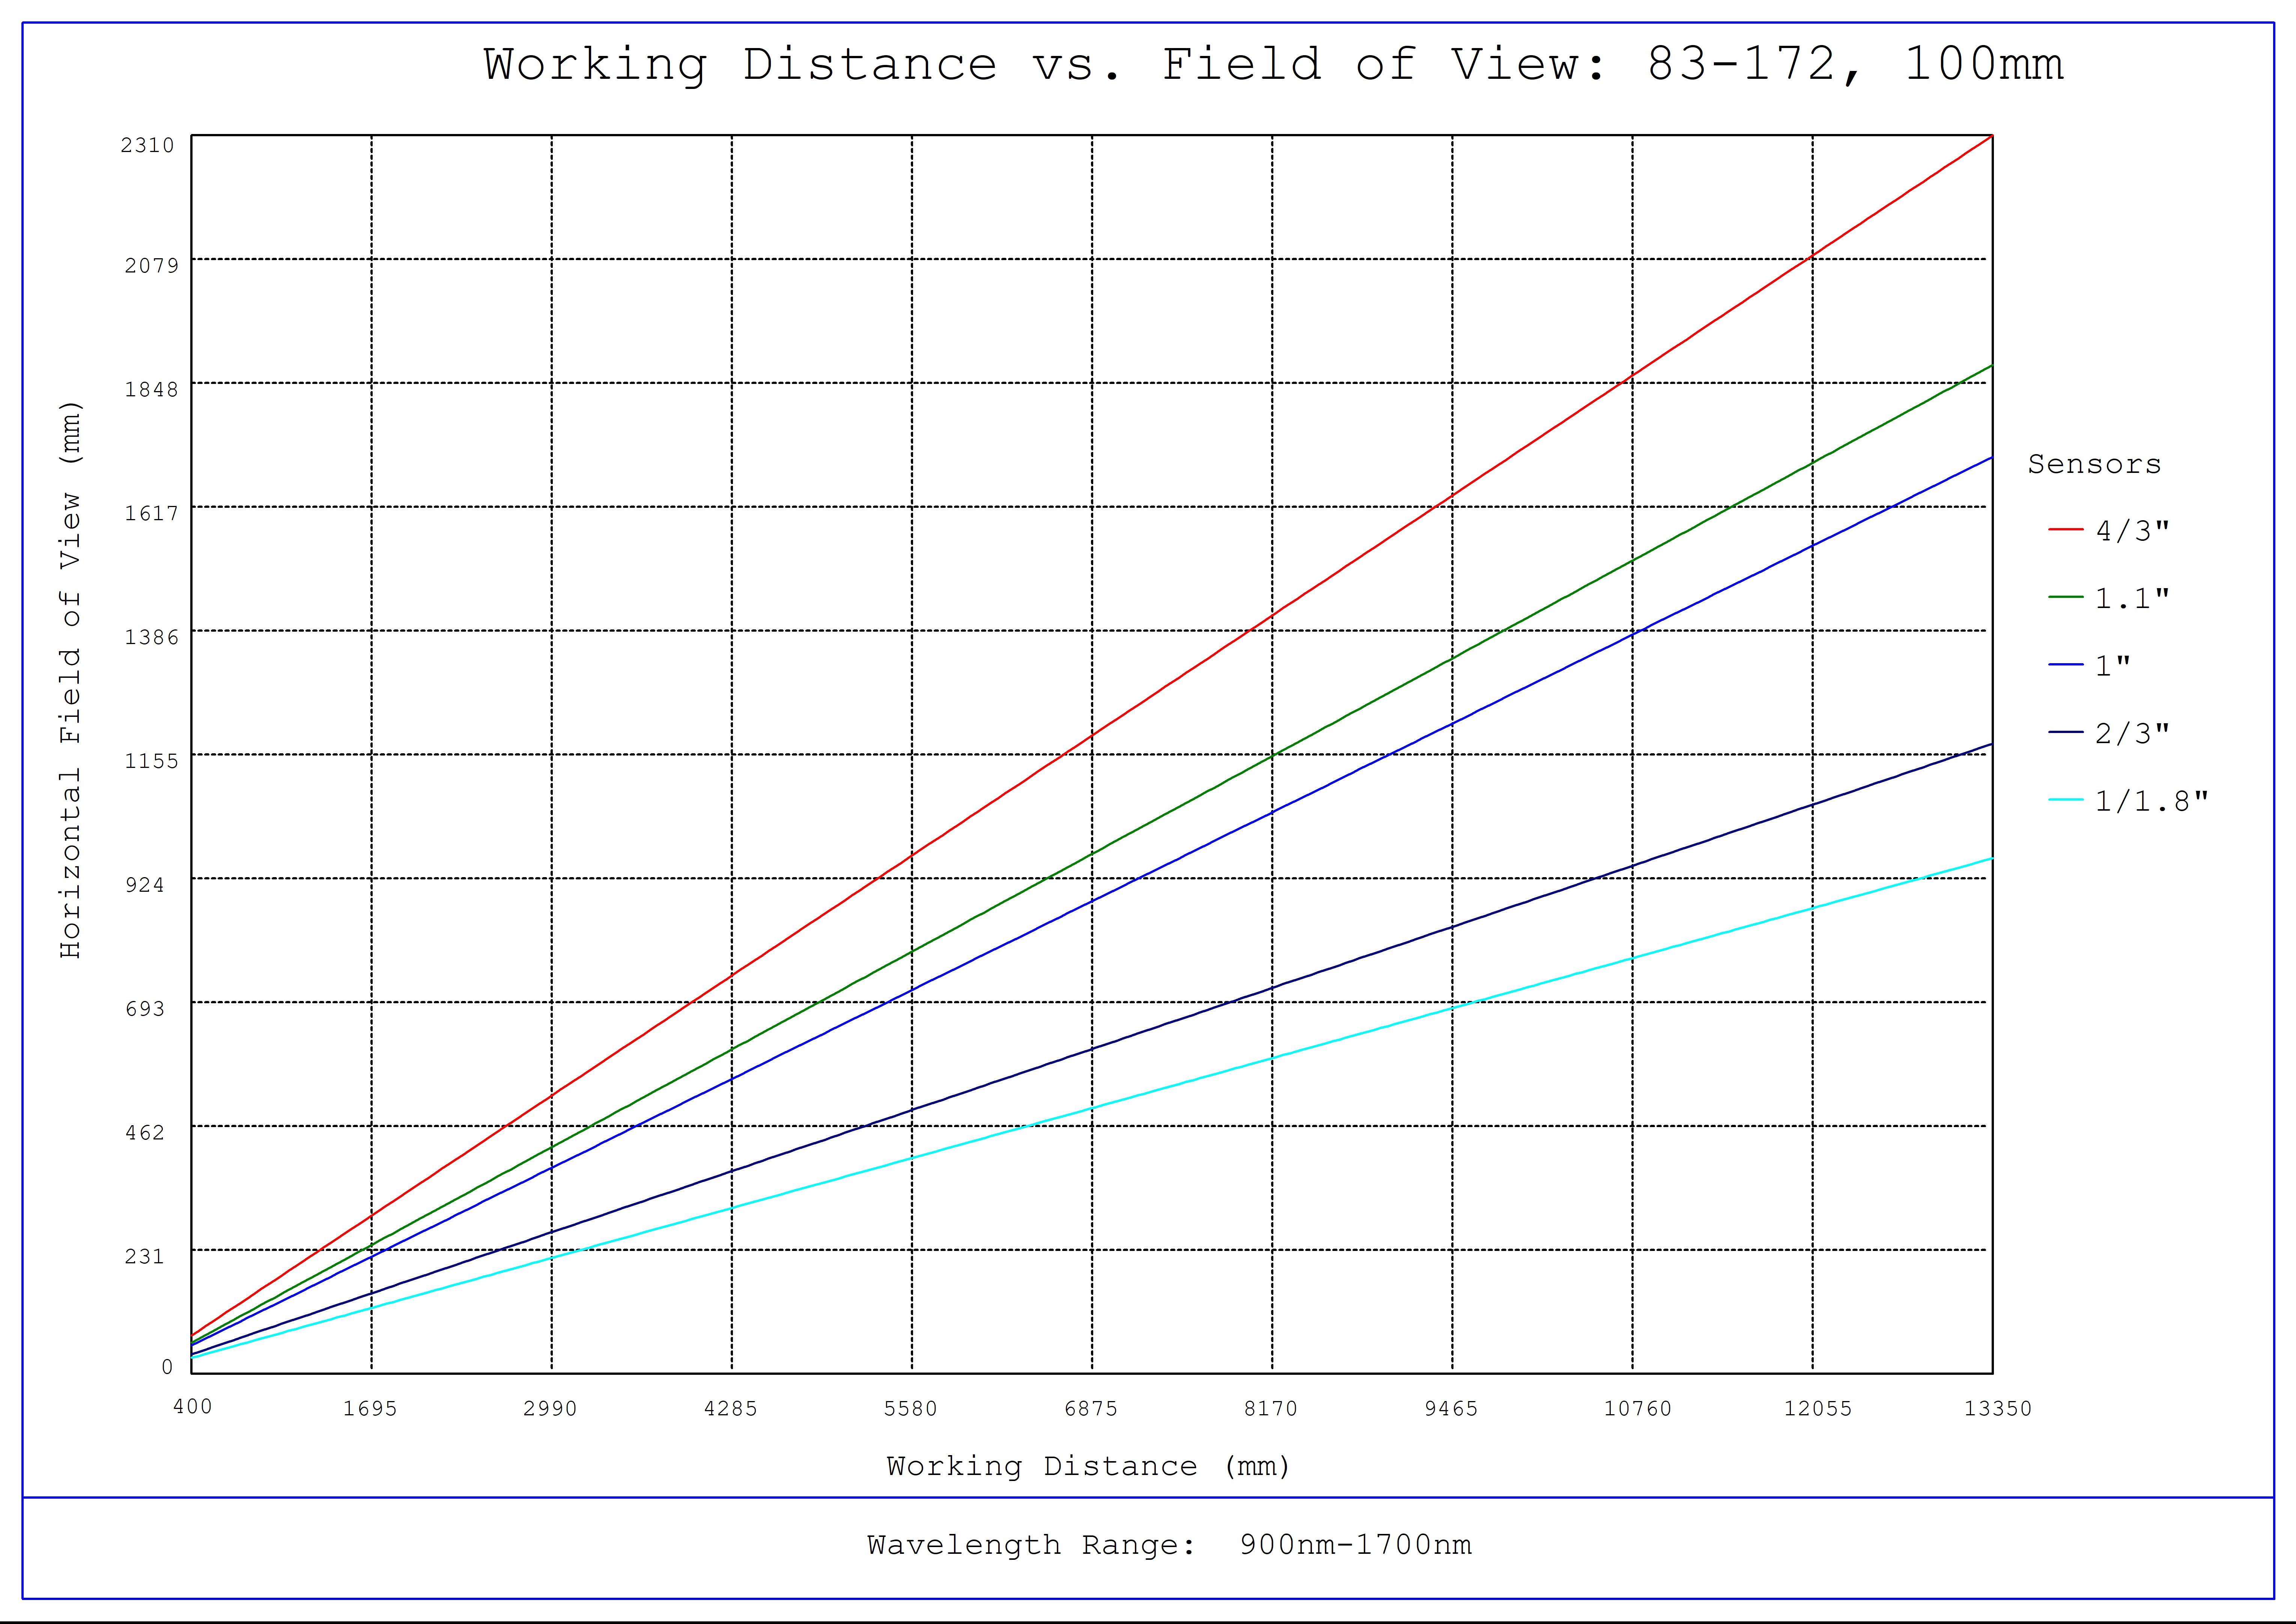 #83-172, 100mm SWIR Series Fixed Focal Length Lens, M42 x 1.0, Working Distance versus Field of View Plot